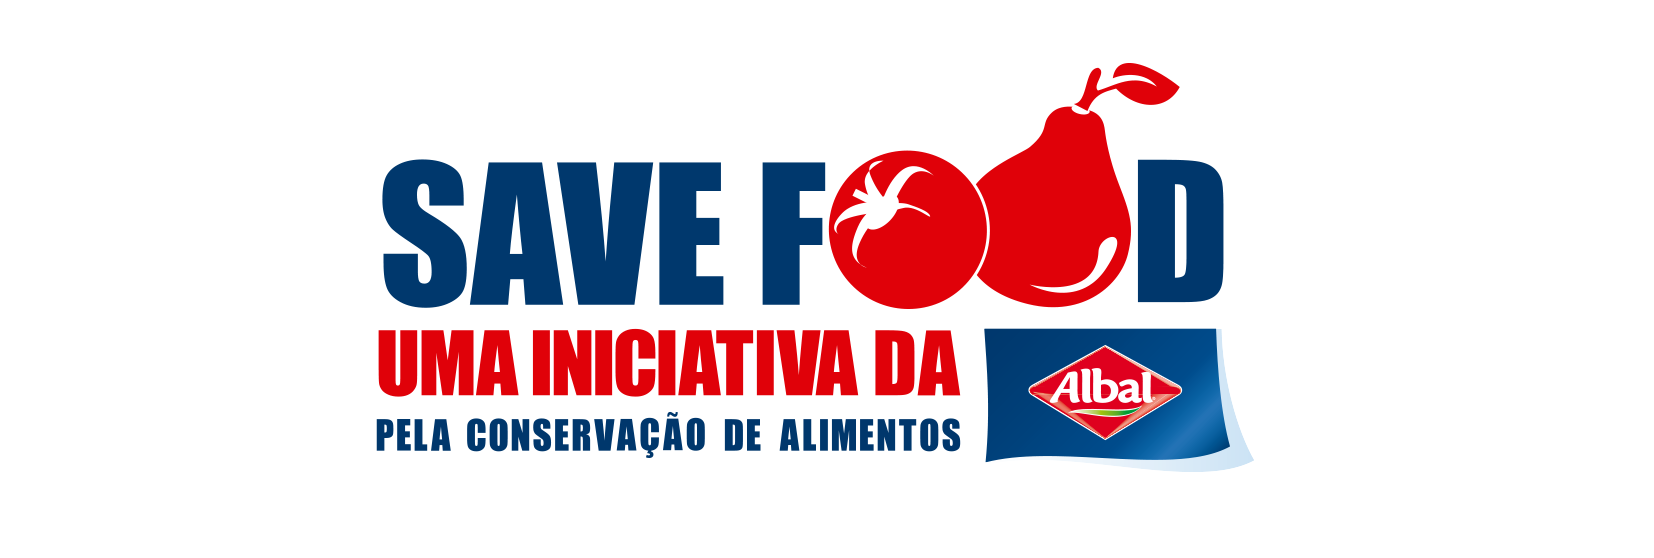 Iniciativa Save-Food® Albal®